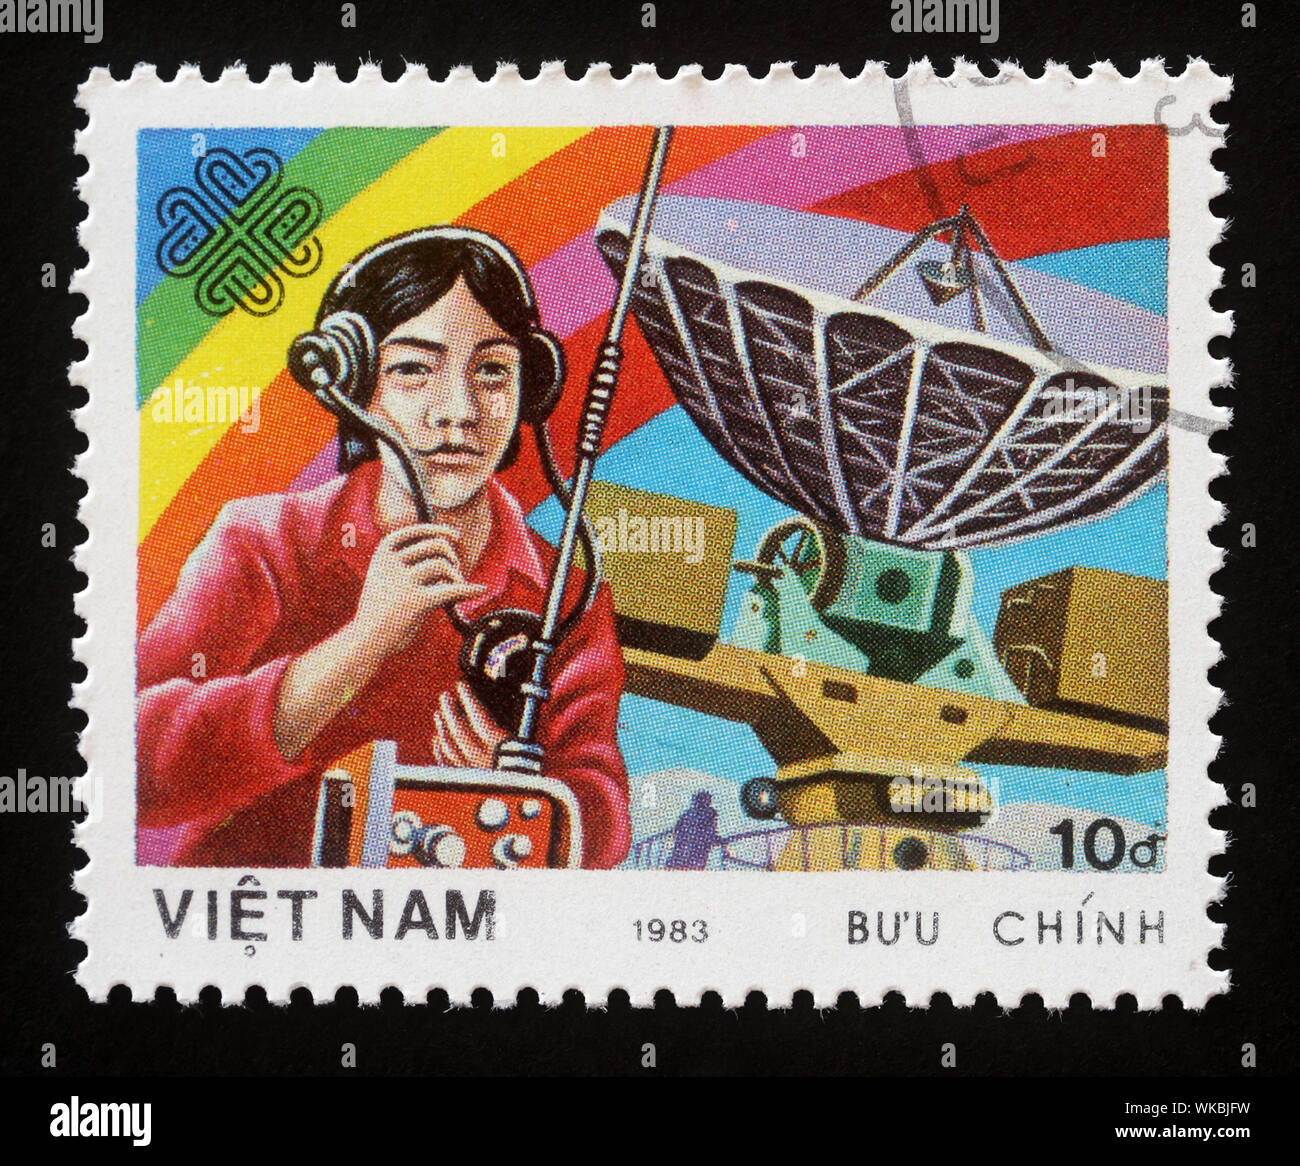 Stamp printed in Vietnam shows Radiooperator and antenna, World Communication Year, circa 1983. Stock Photo